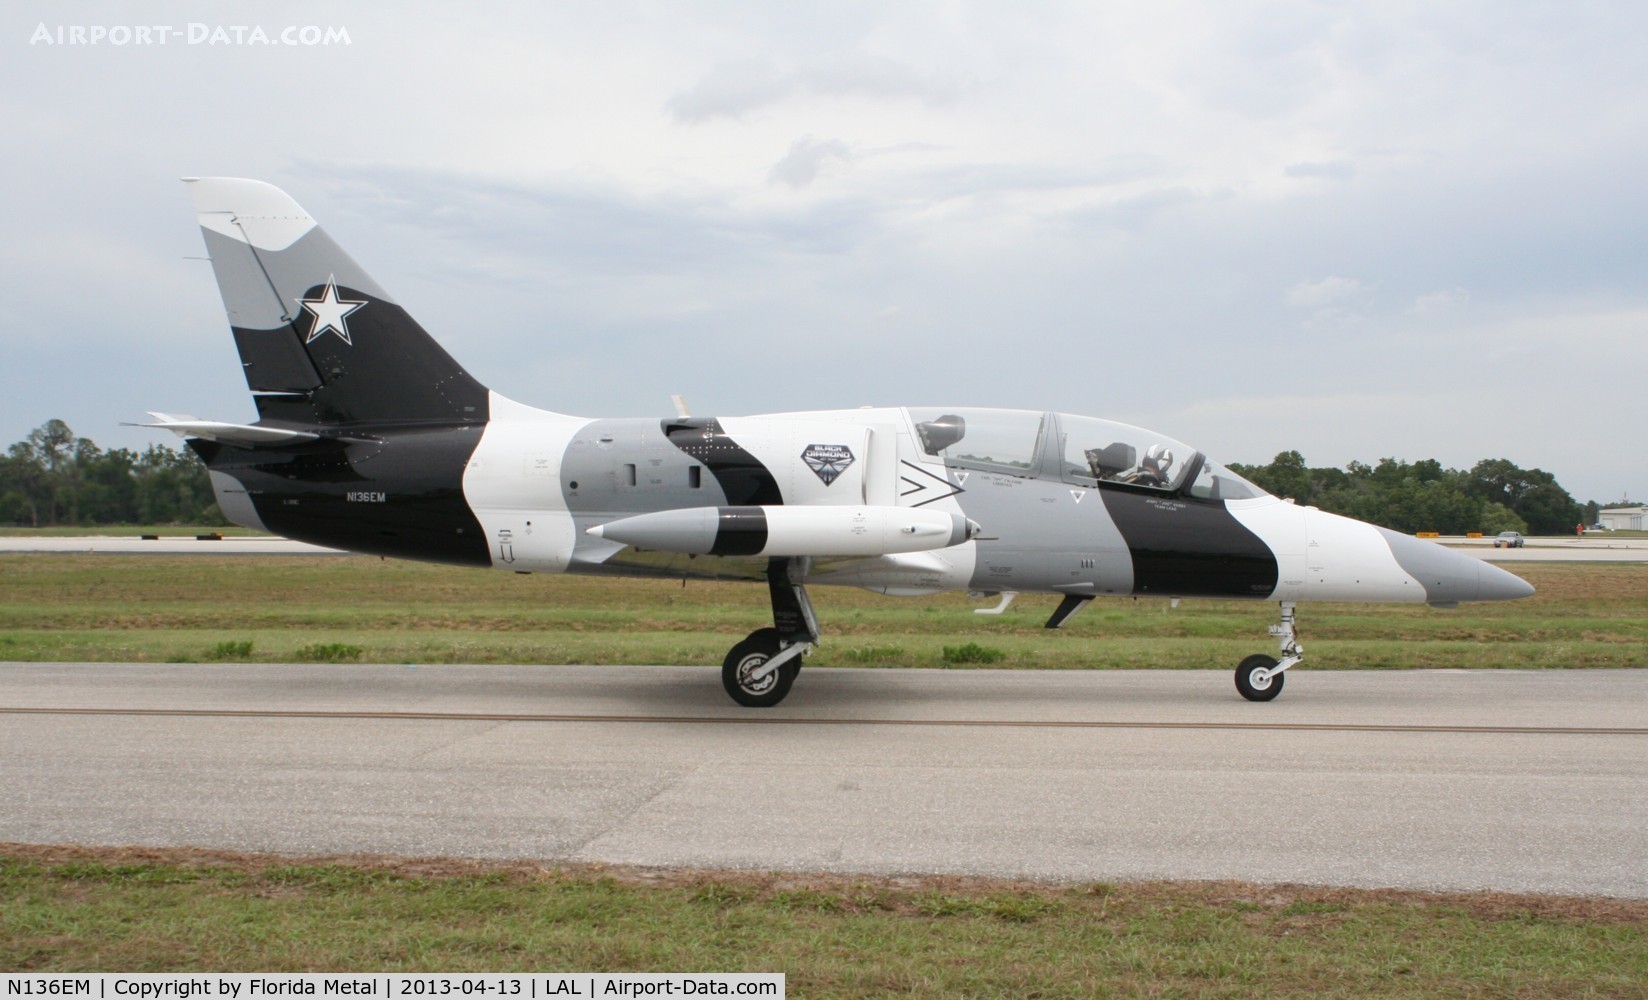 N136EM, 1984 Aero L-39C Albatros C/N 432917, Black Diamond L-39